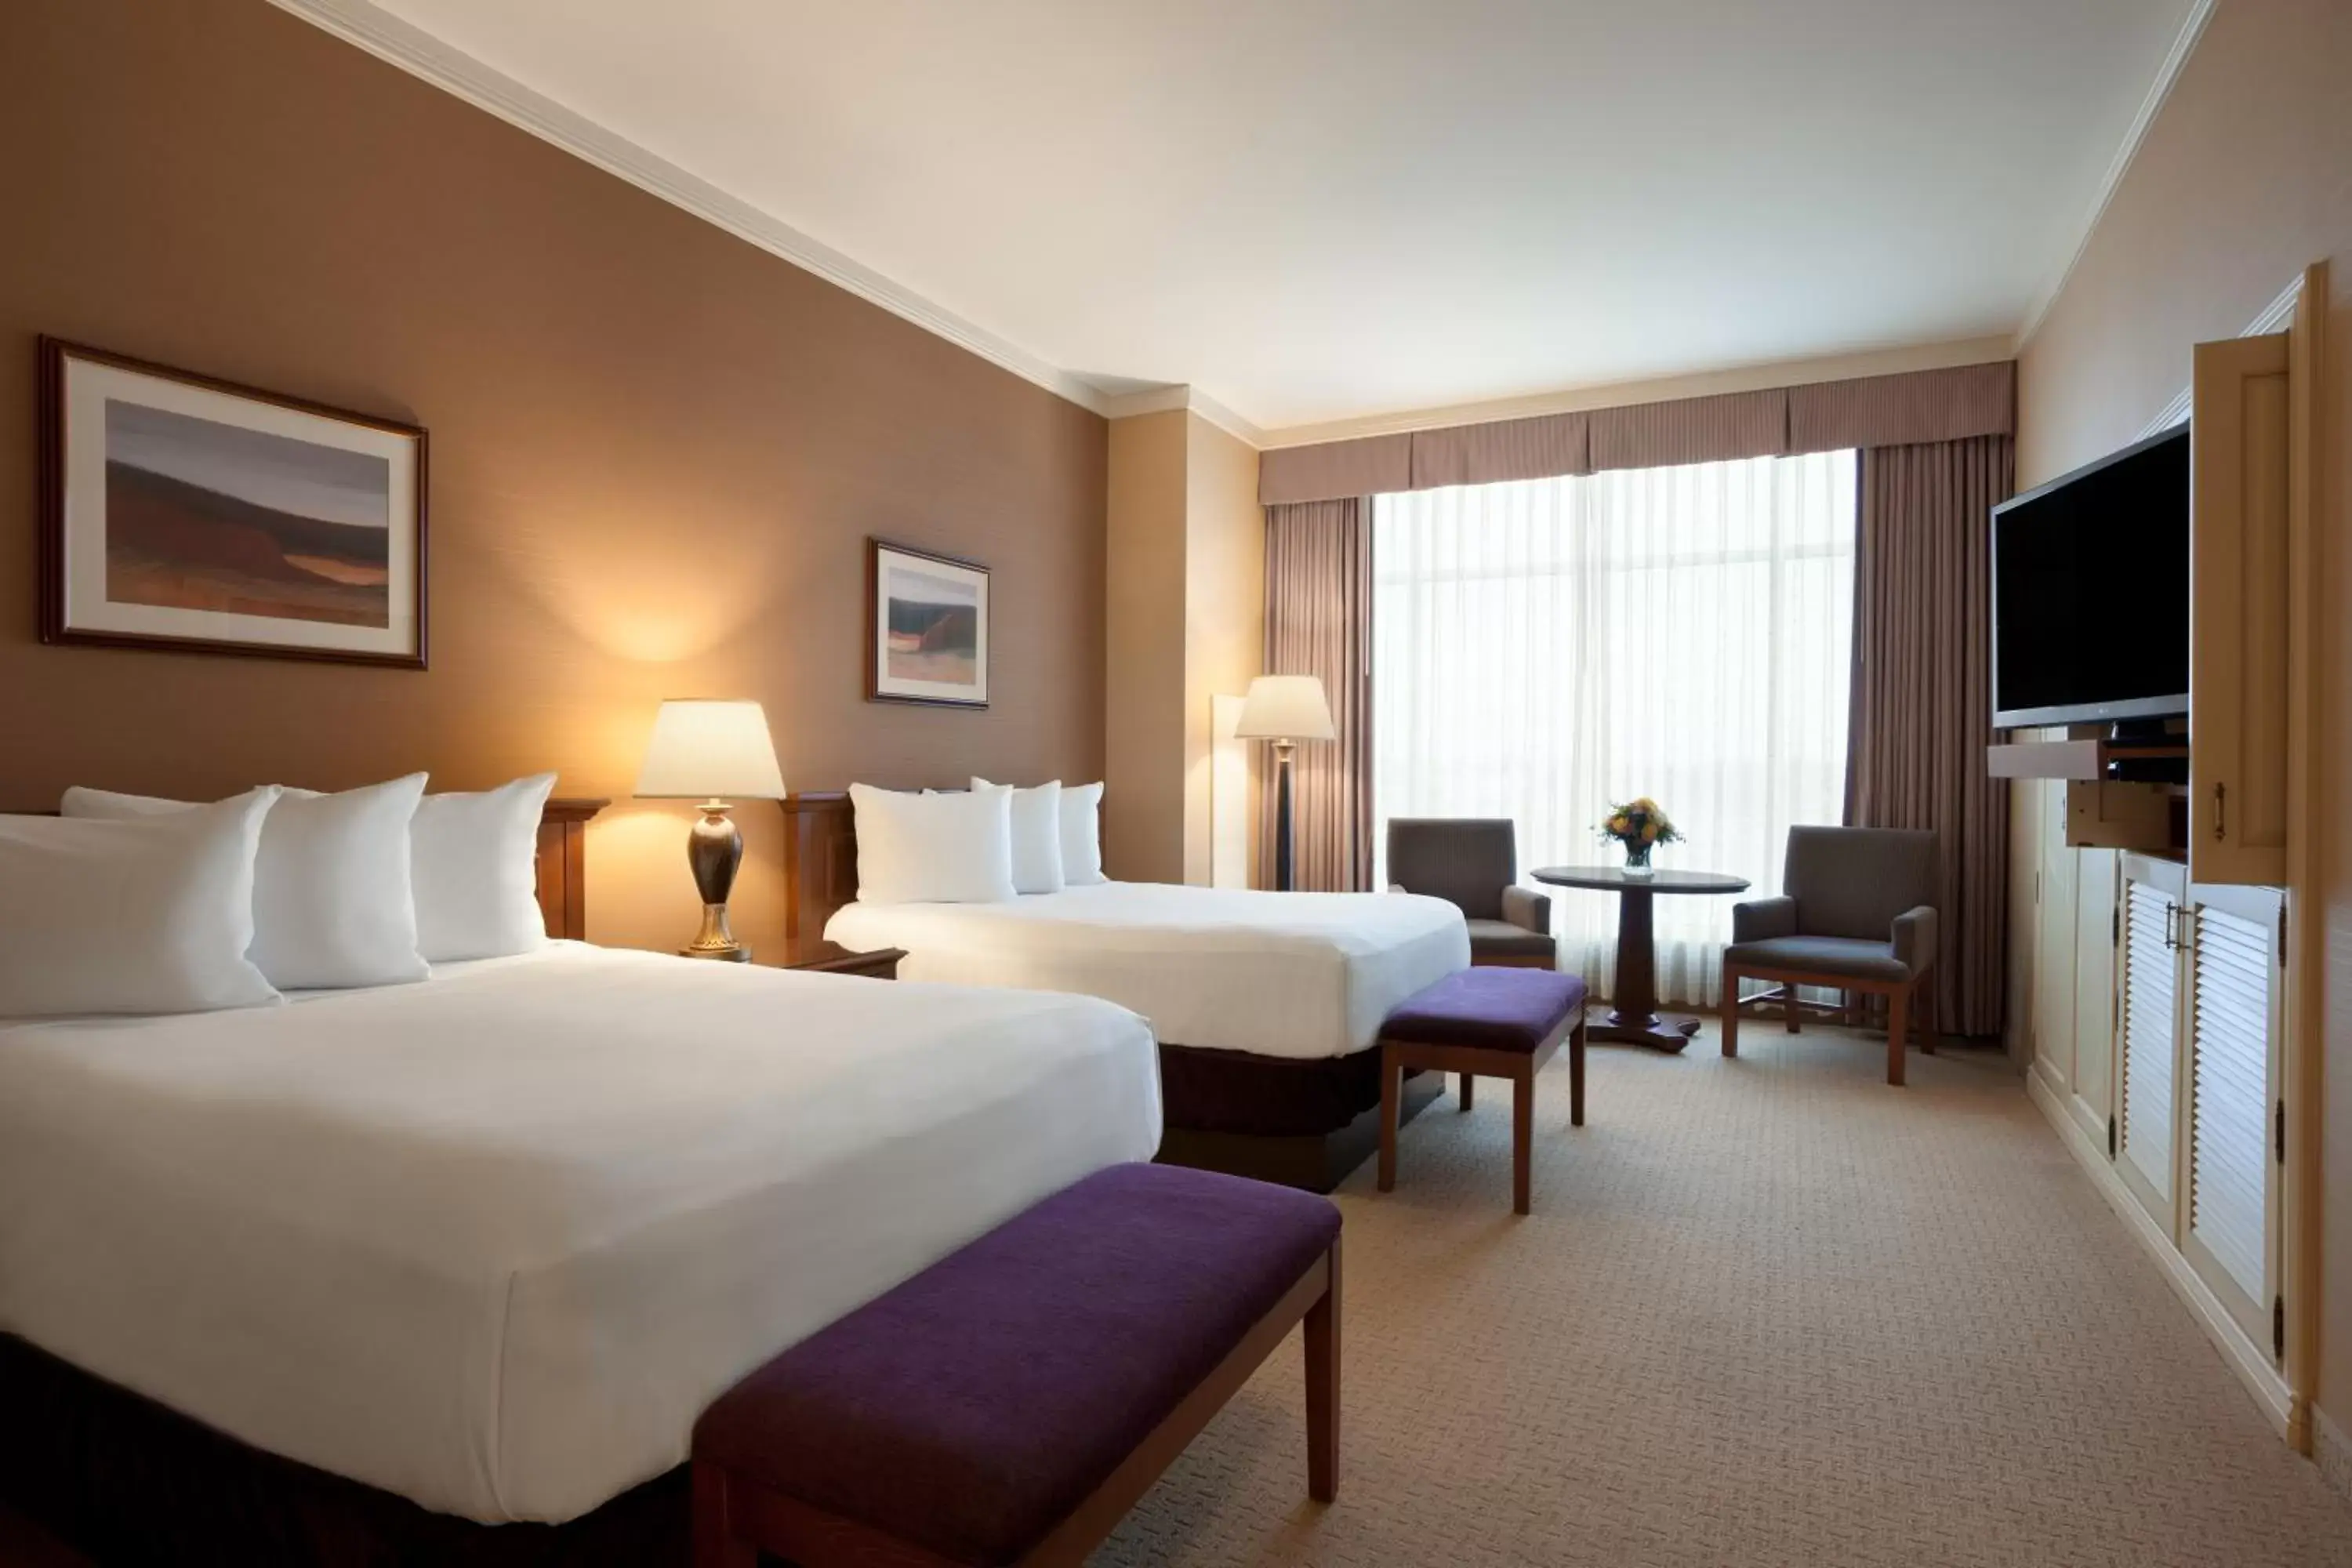 Bed, Room Photo in Harrah's Metropolis Hotel & Casino